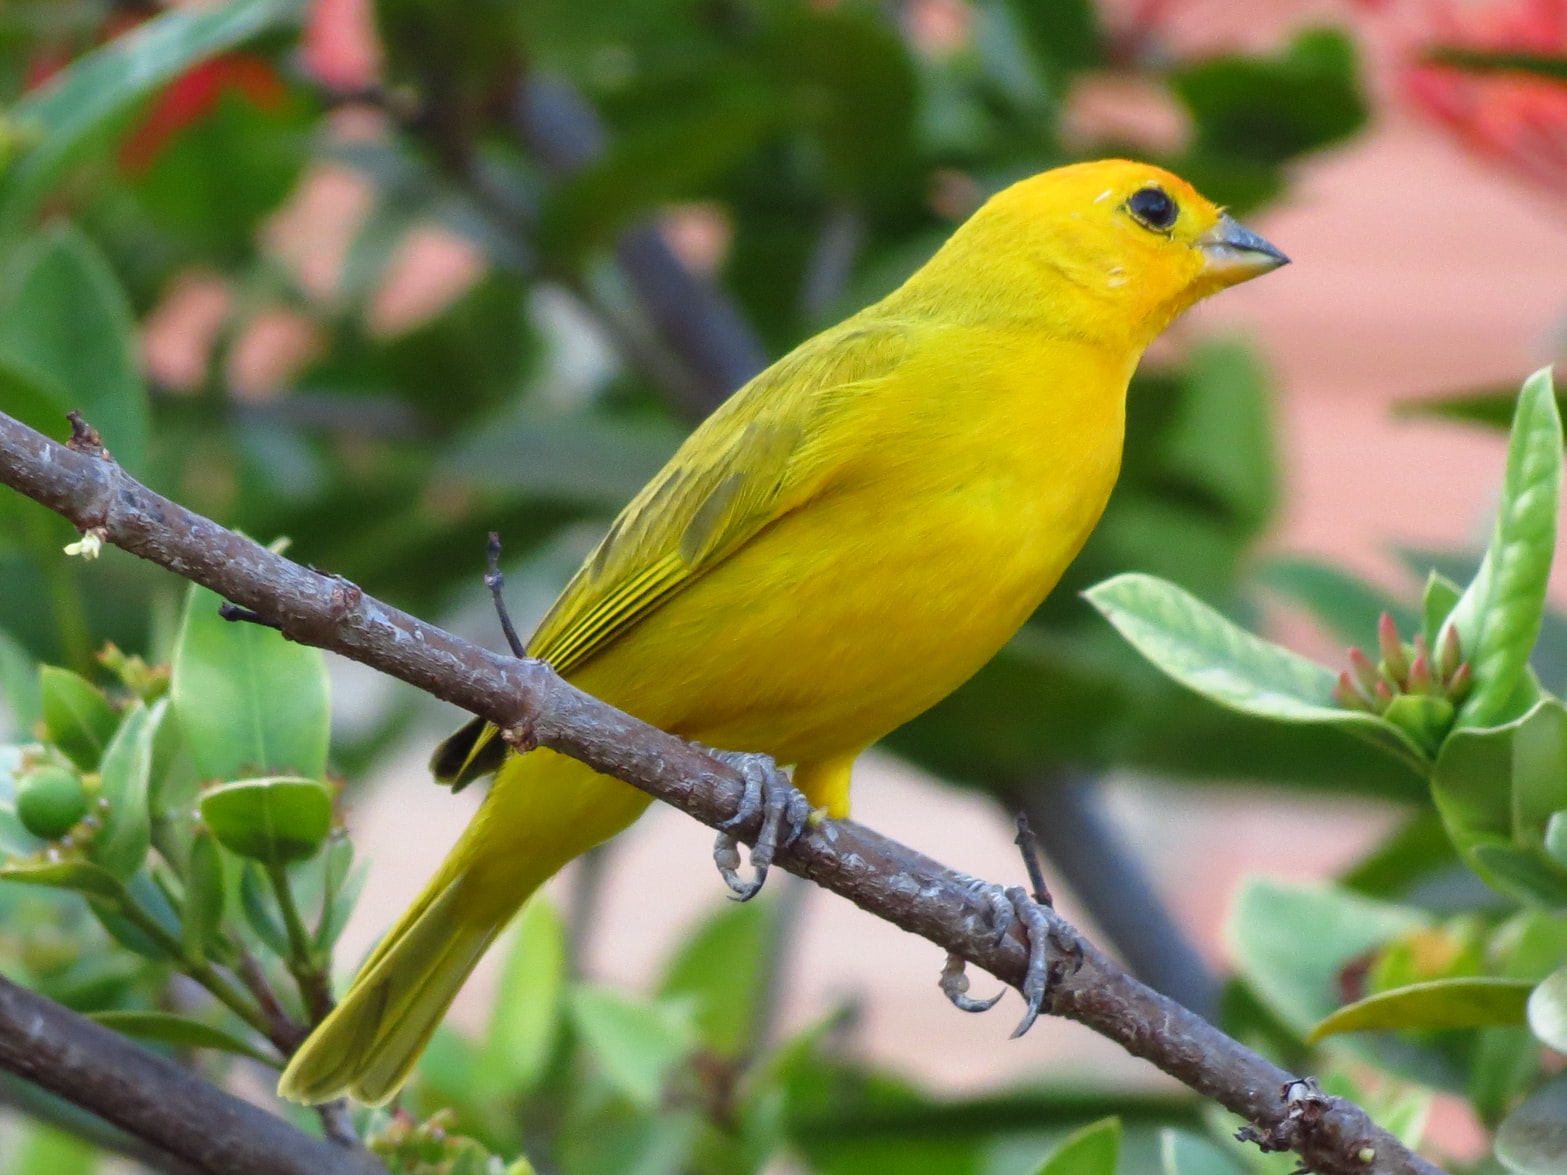 The canary domestic bird